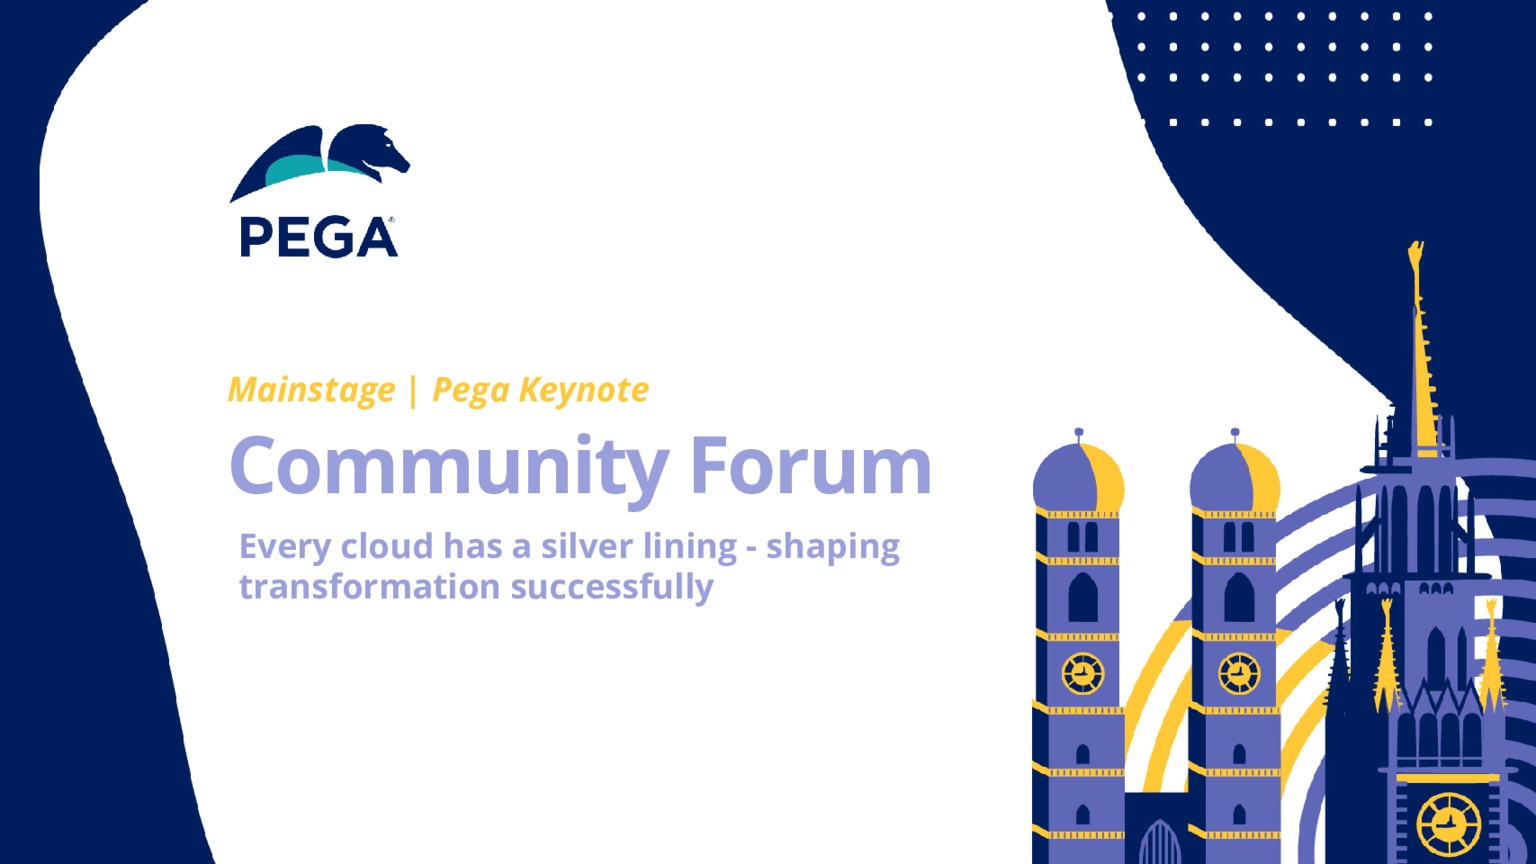 Pega Community Forum - Pega Keynote - Every cloud has a silver lining: shaping transformation successfully (Presentation)